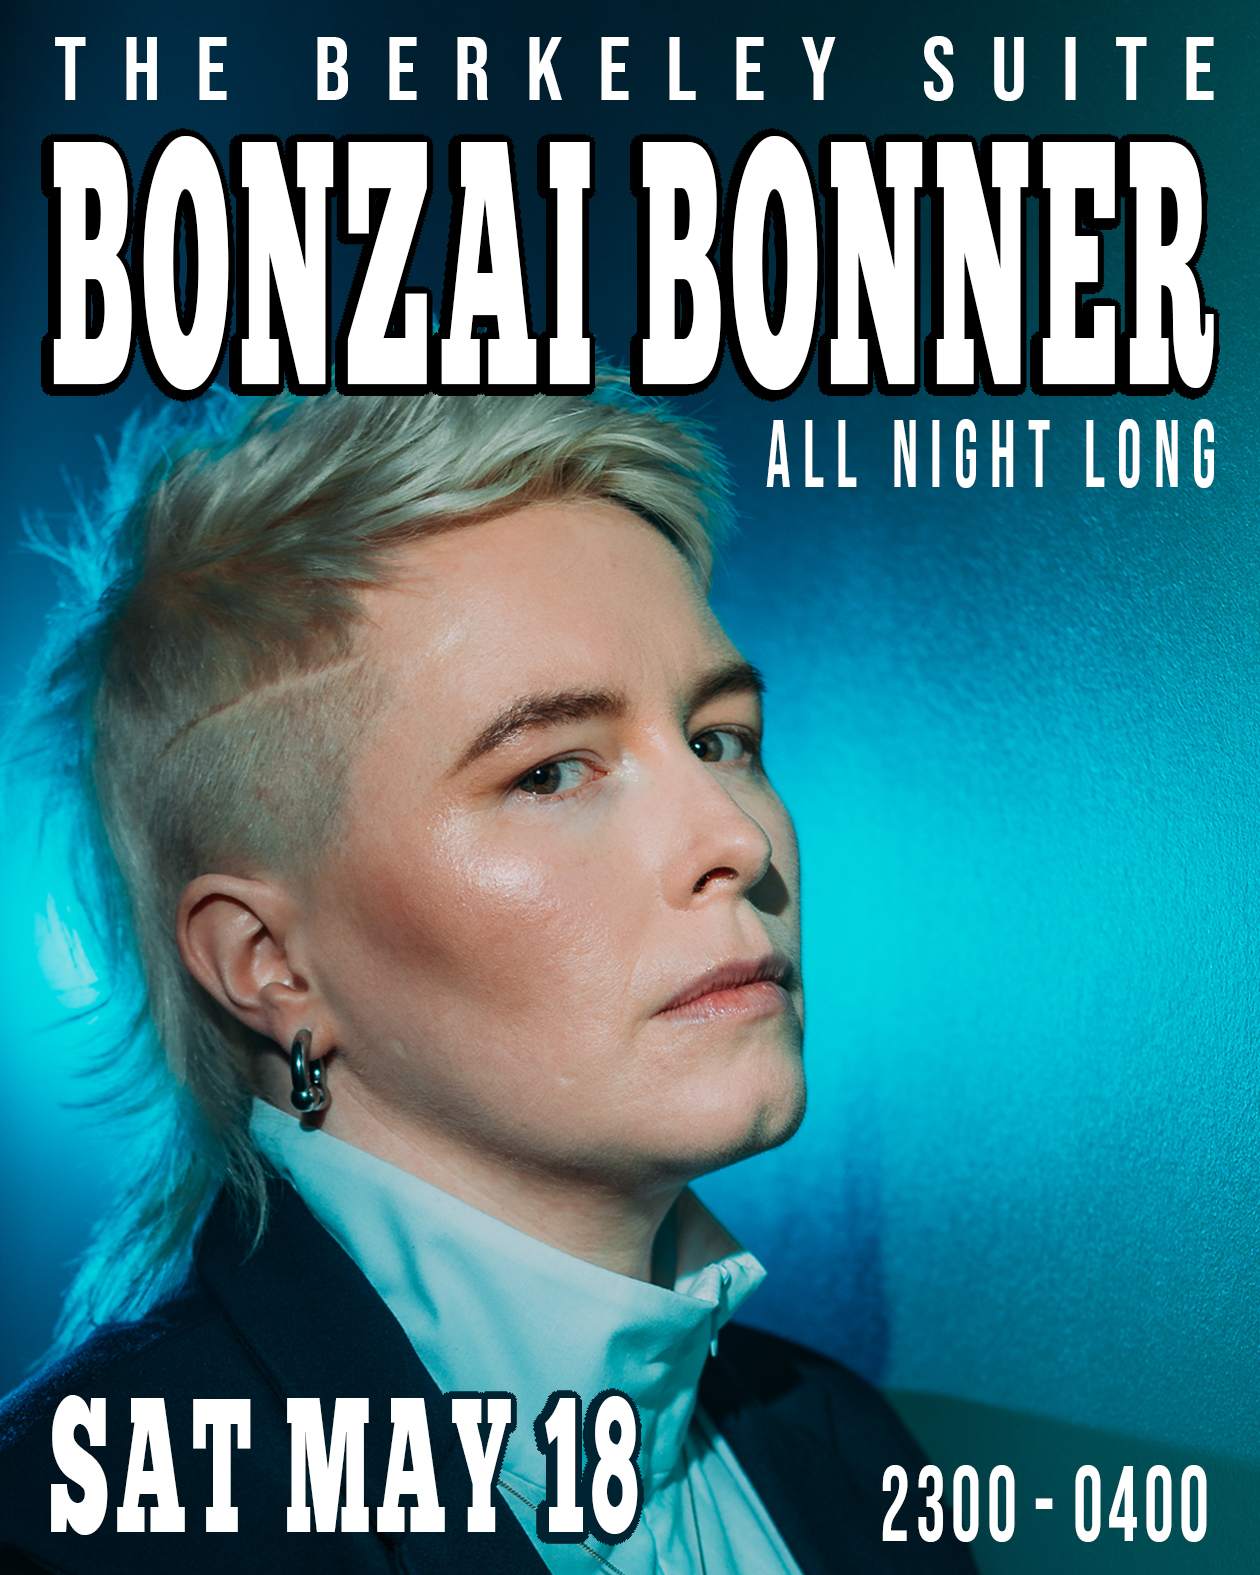 The Berkeley Suite - Bonzai Bonner ALL NIGHT LONG - フライヤー表